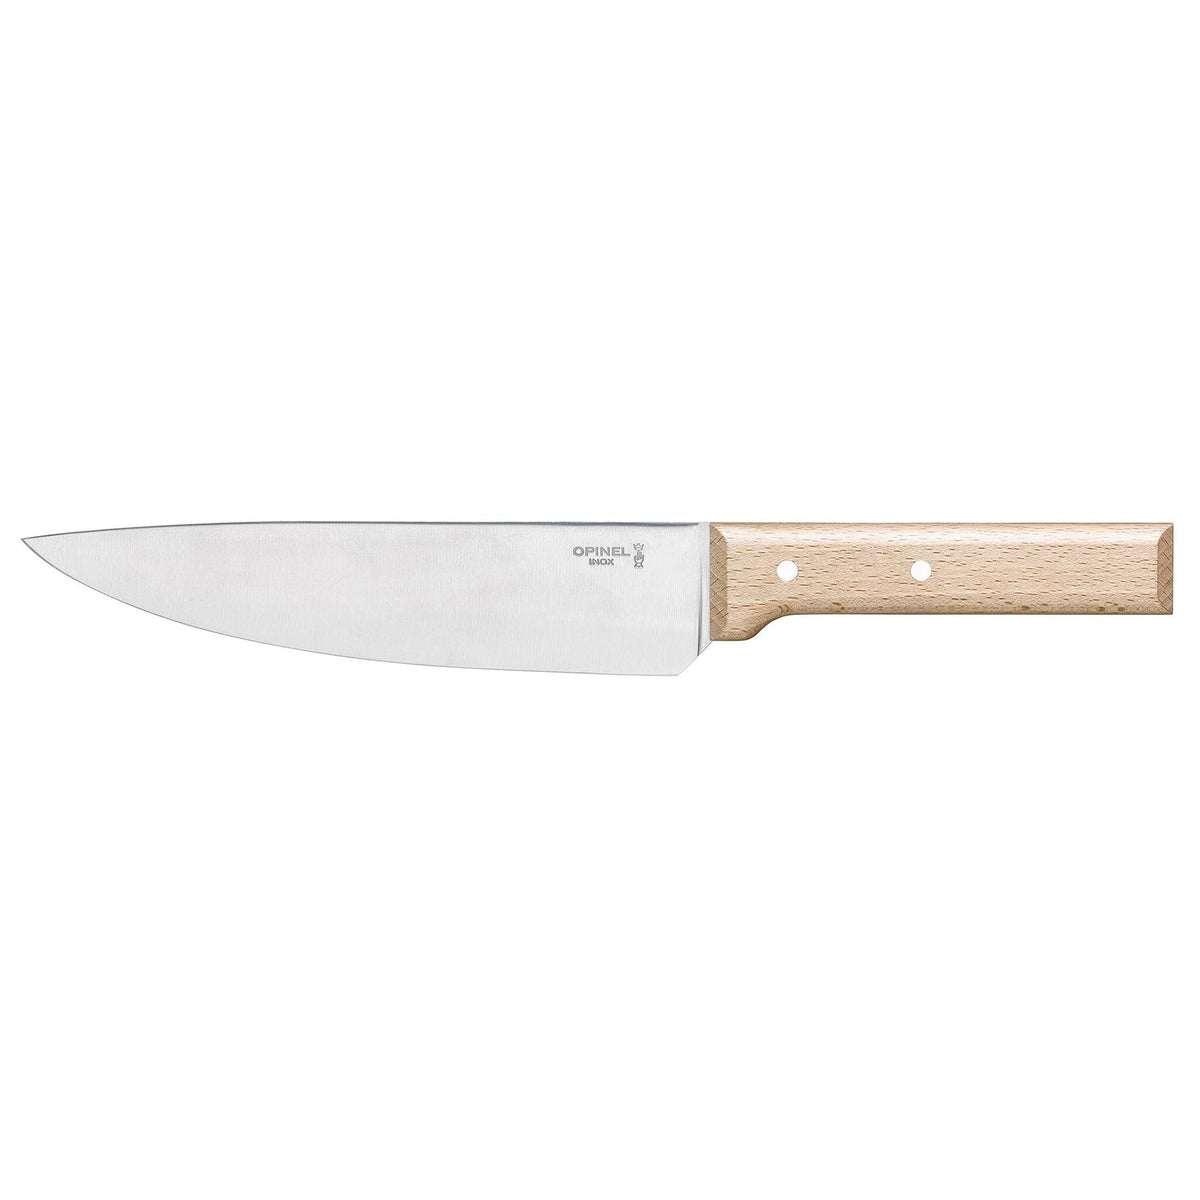 Opinel No.118 Chef Knife - Opinel USA Inc -bluecashew kitchen homestead